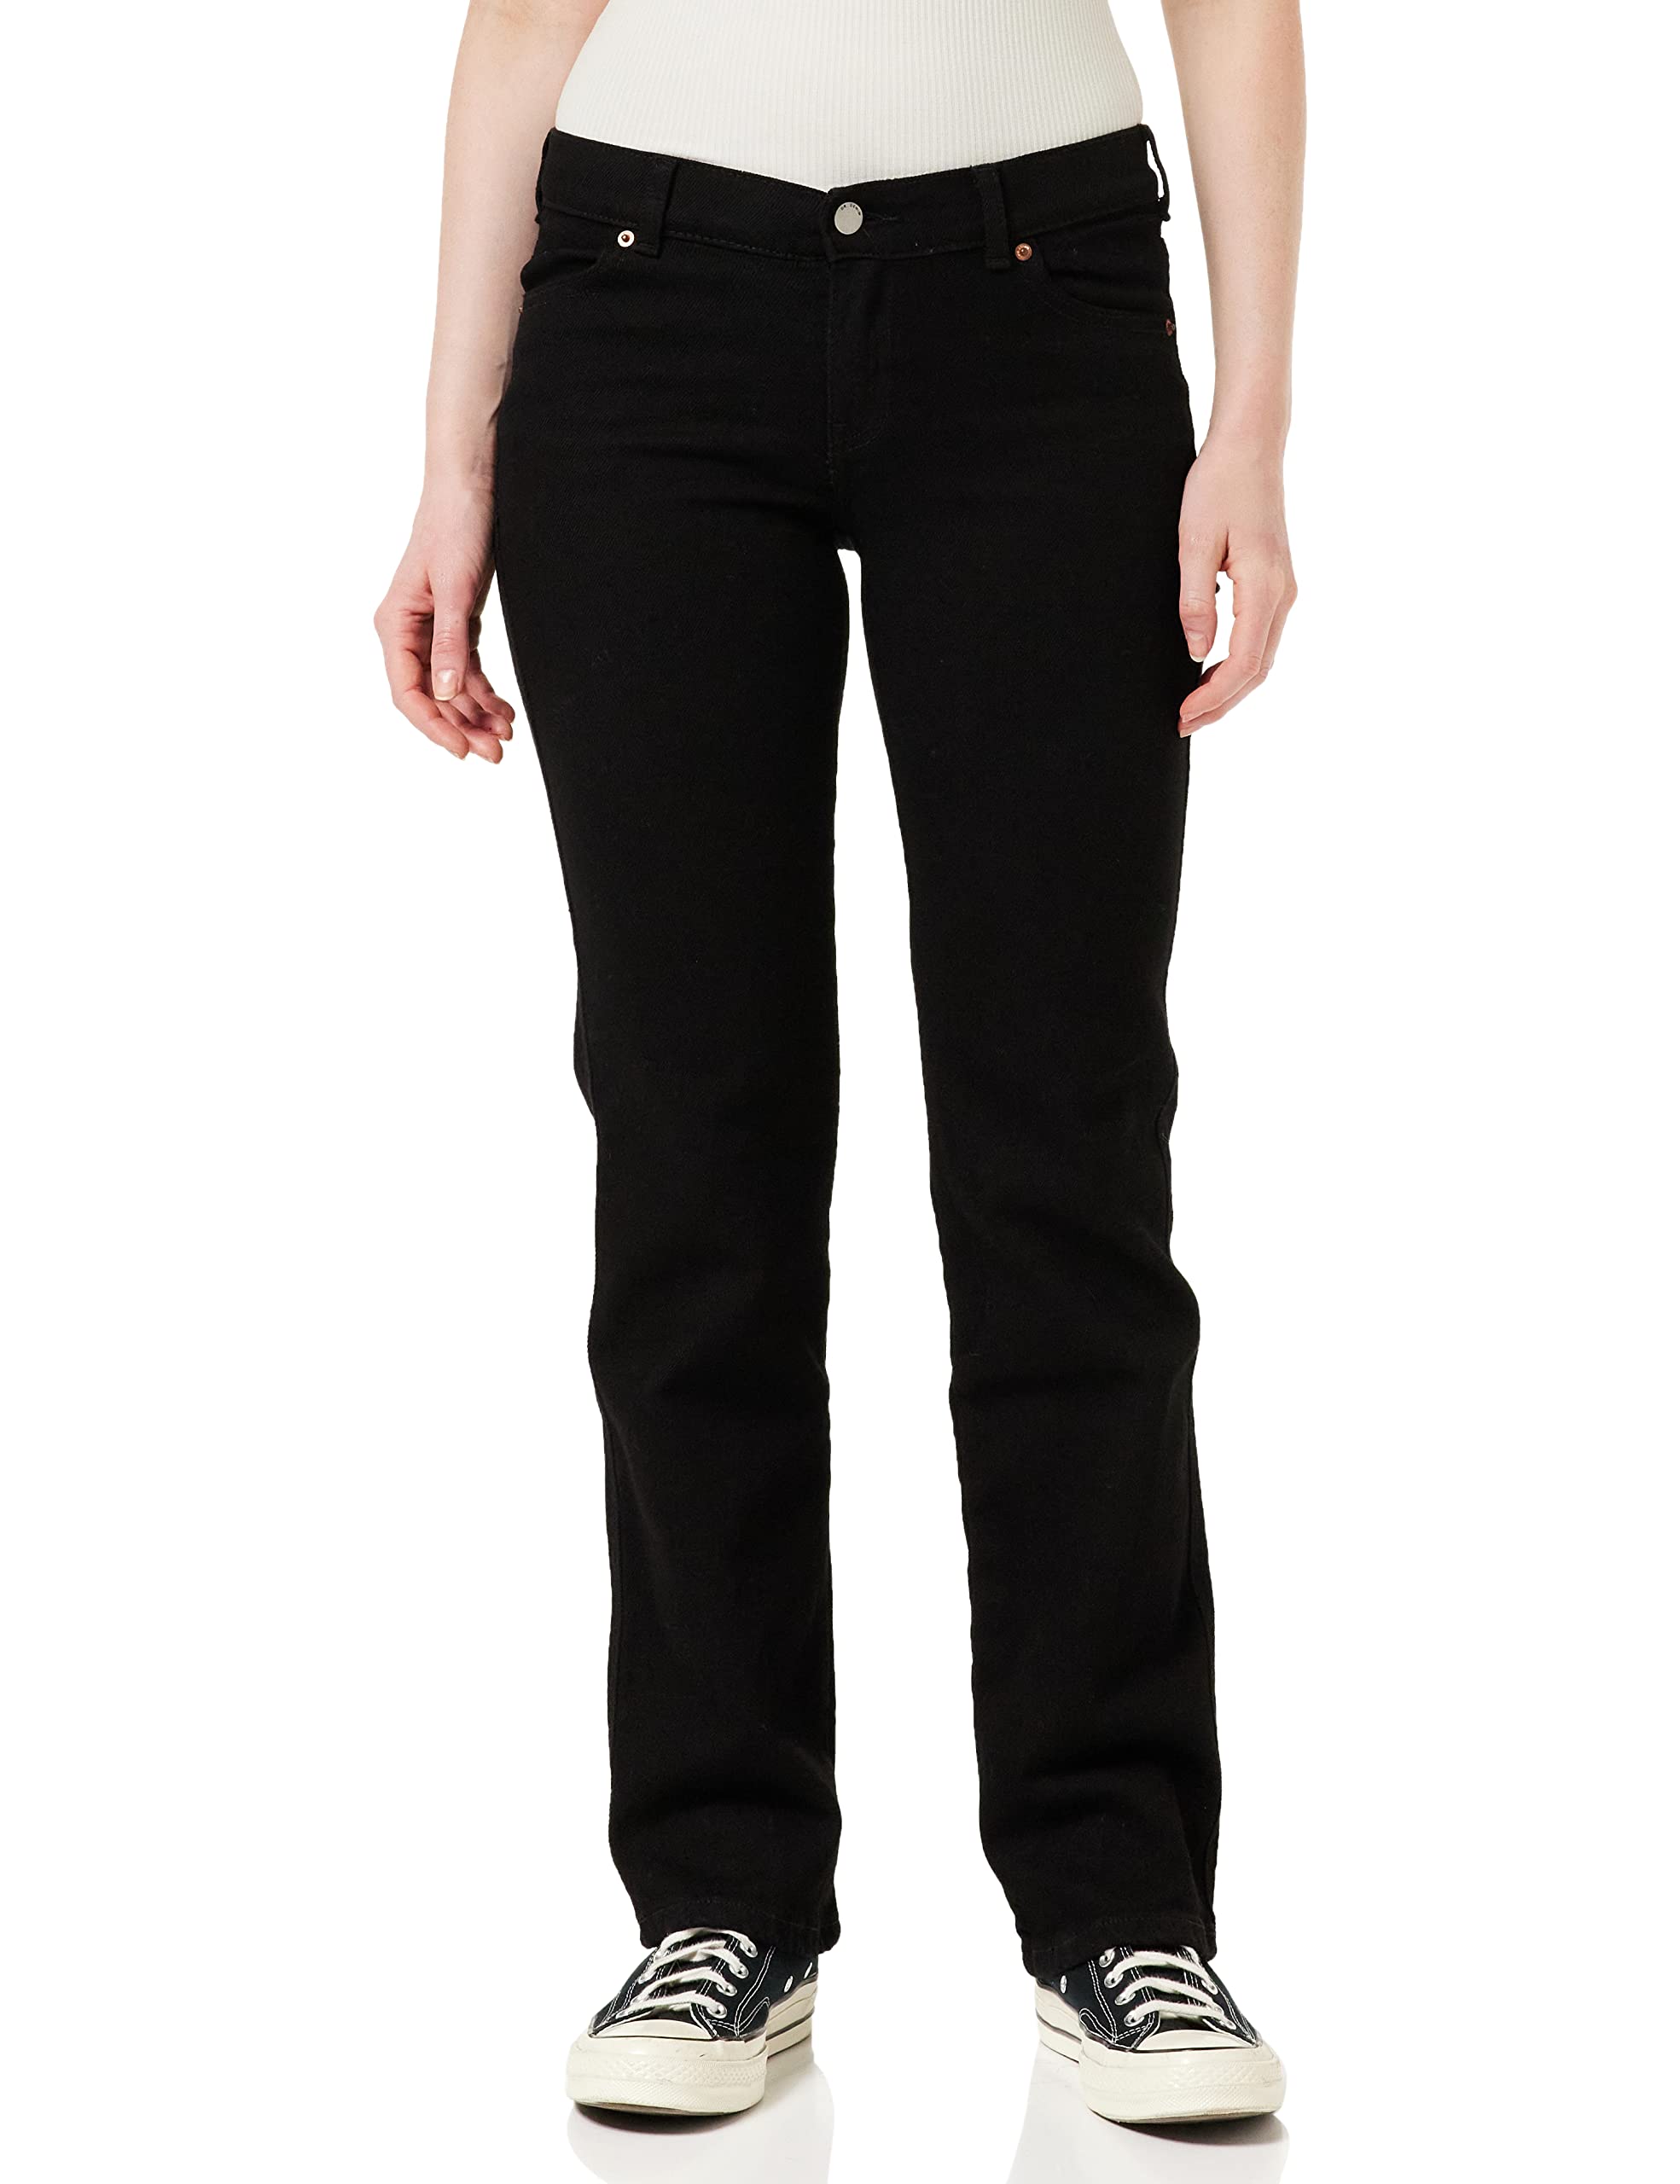 Dr Denim Damen Dixy Straight Jeans, Solid Black, L/32